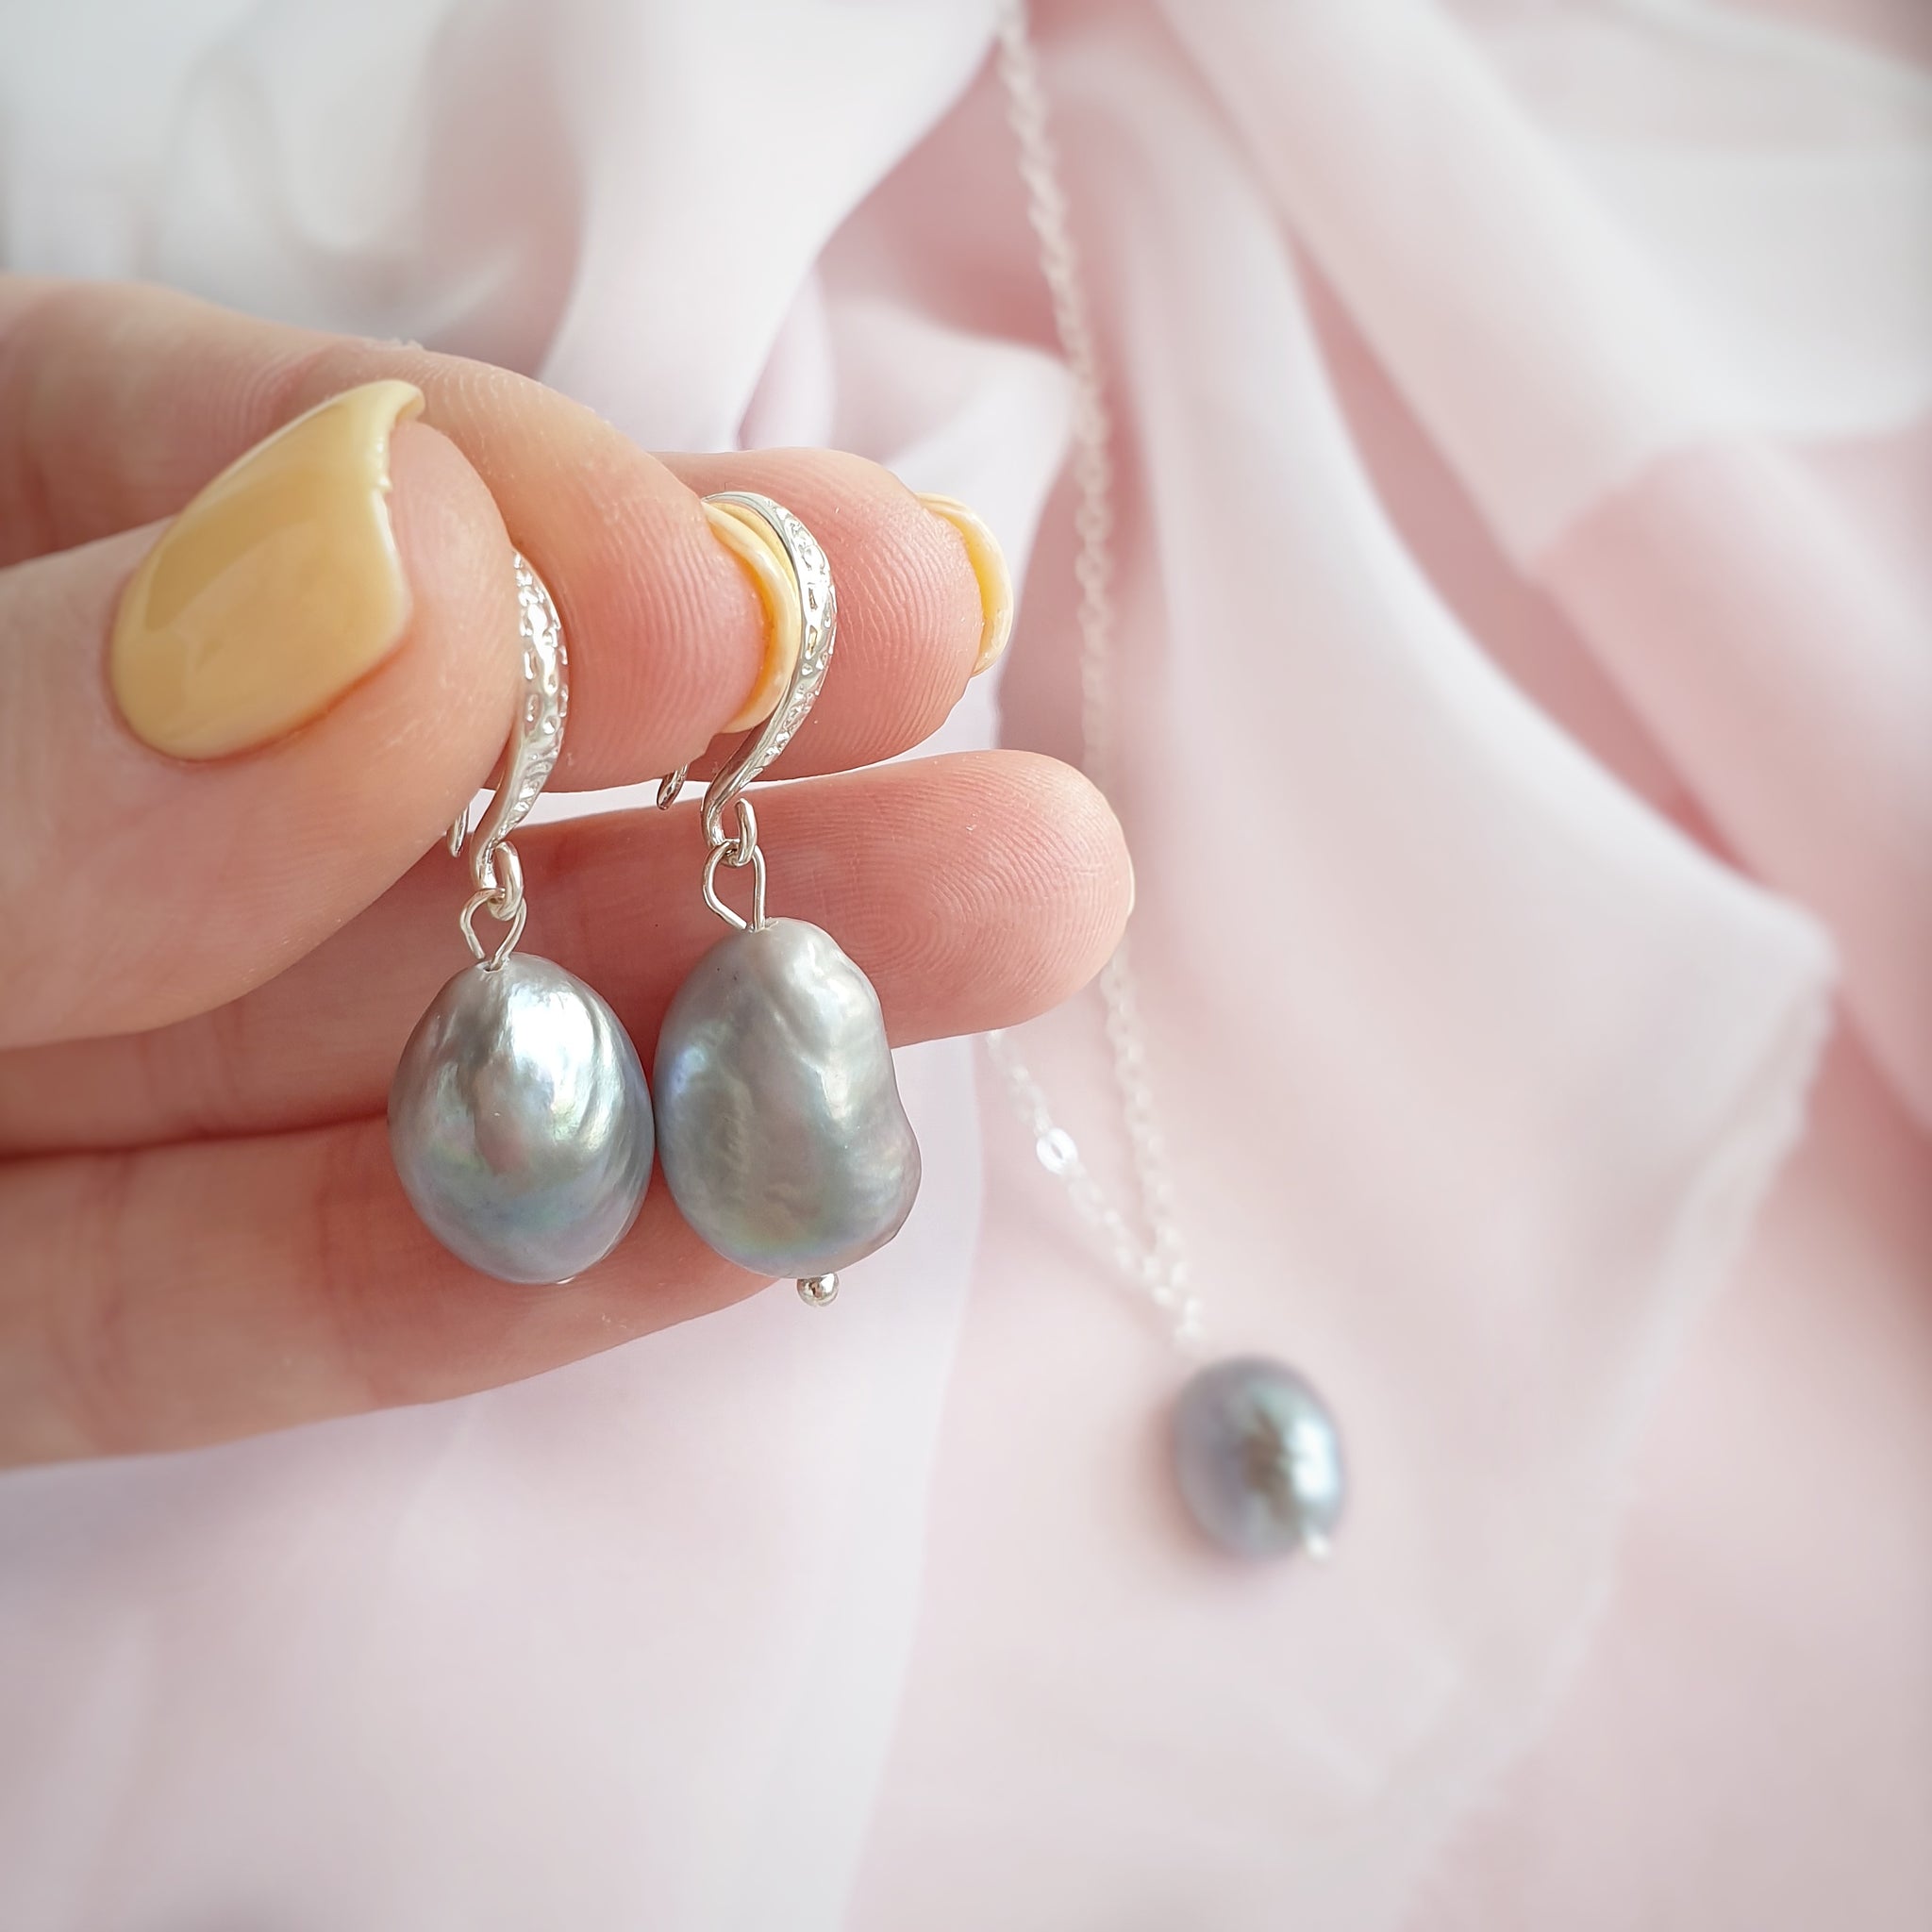 Silver pearl bridal jewelry set